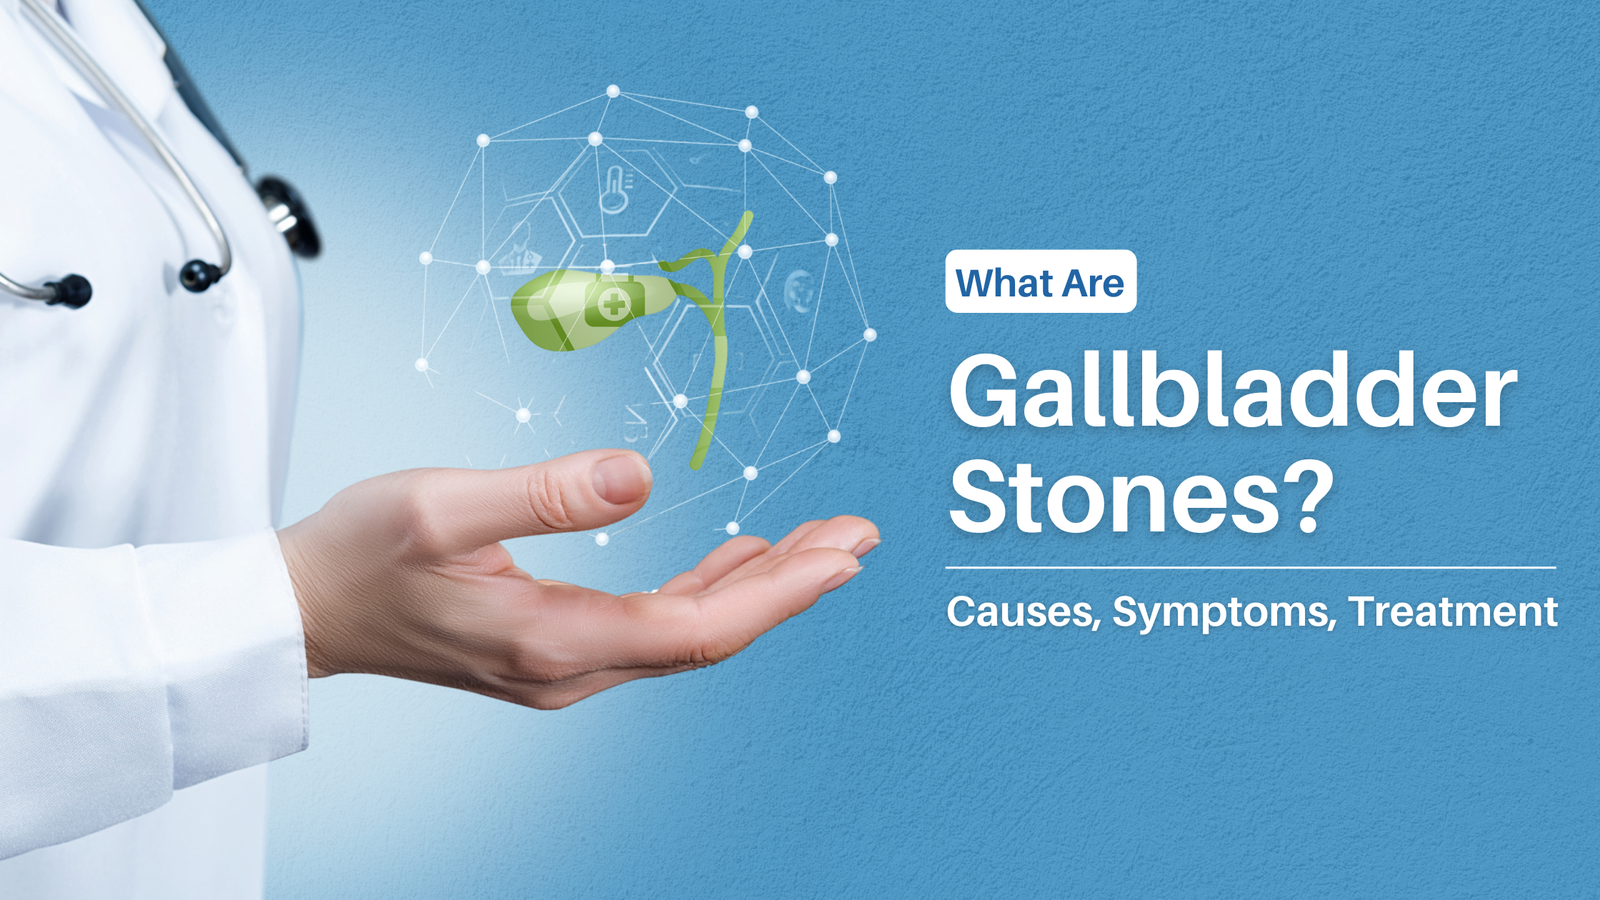 Gallbladder stones treatment